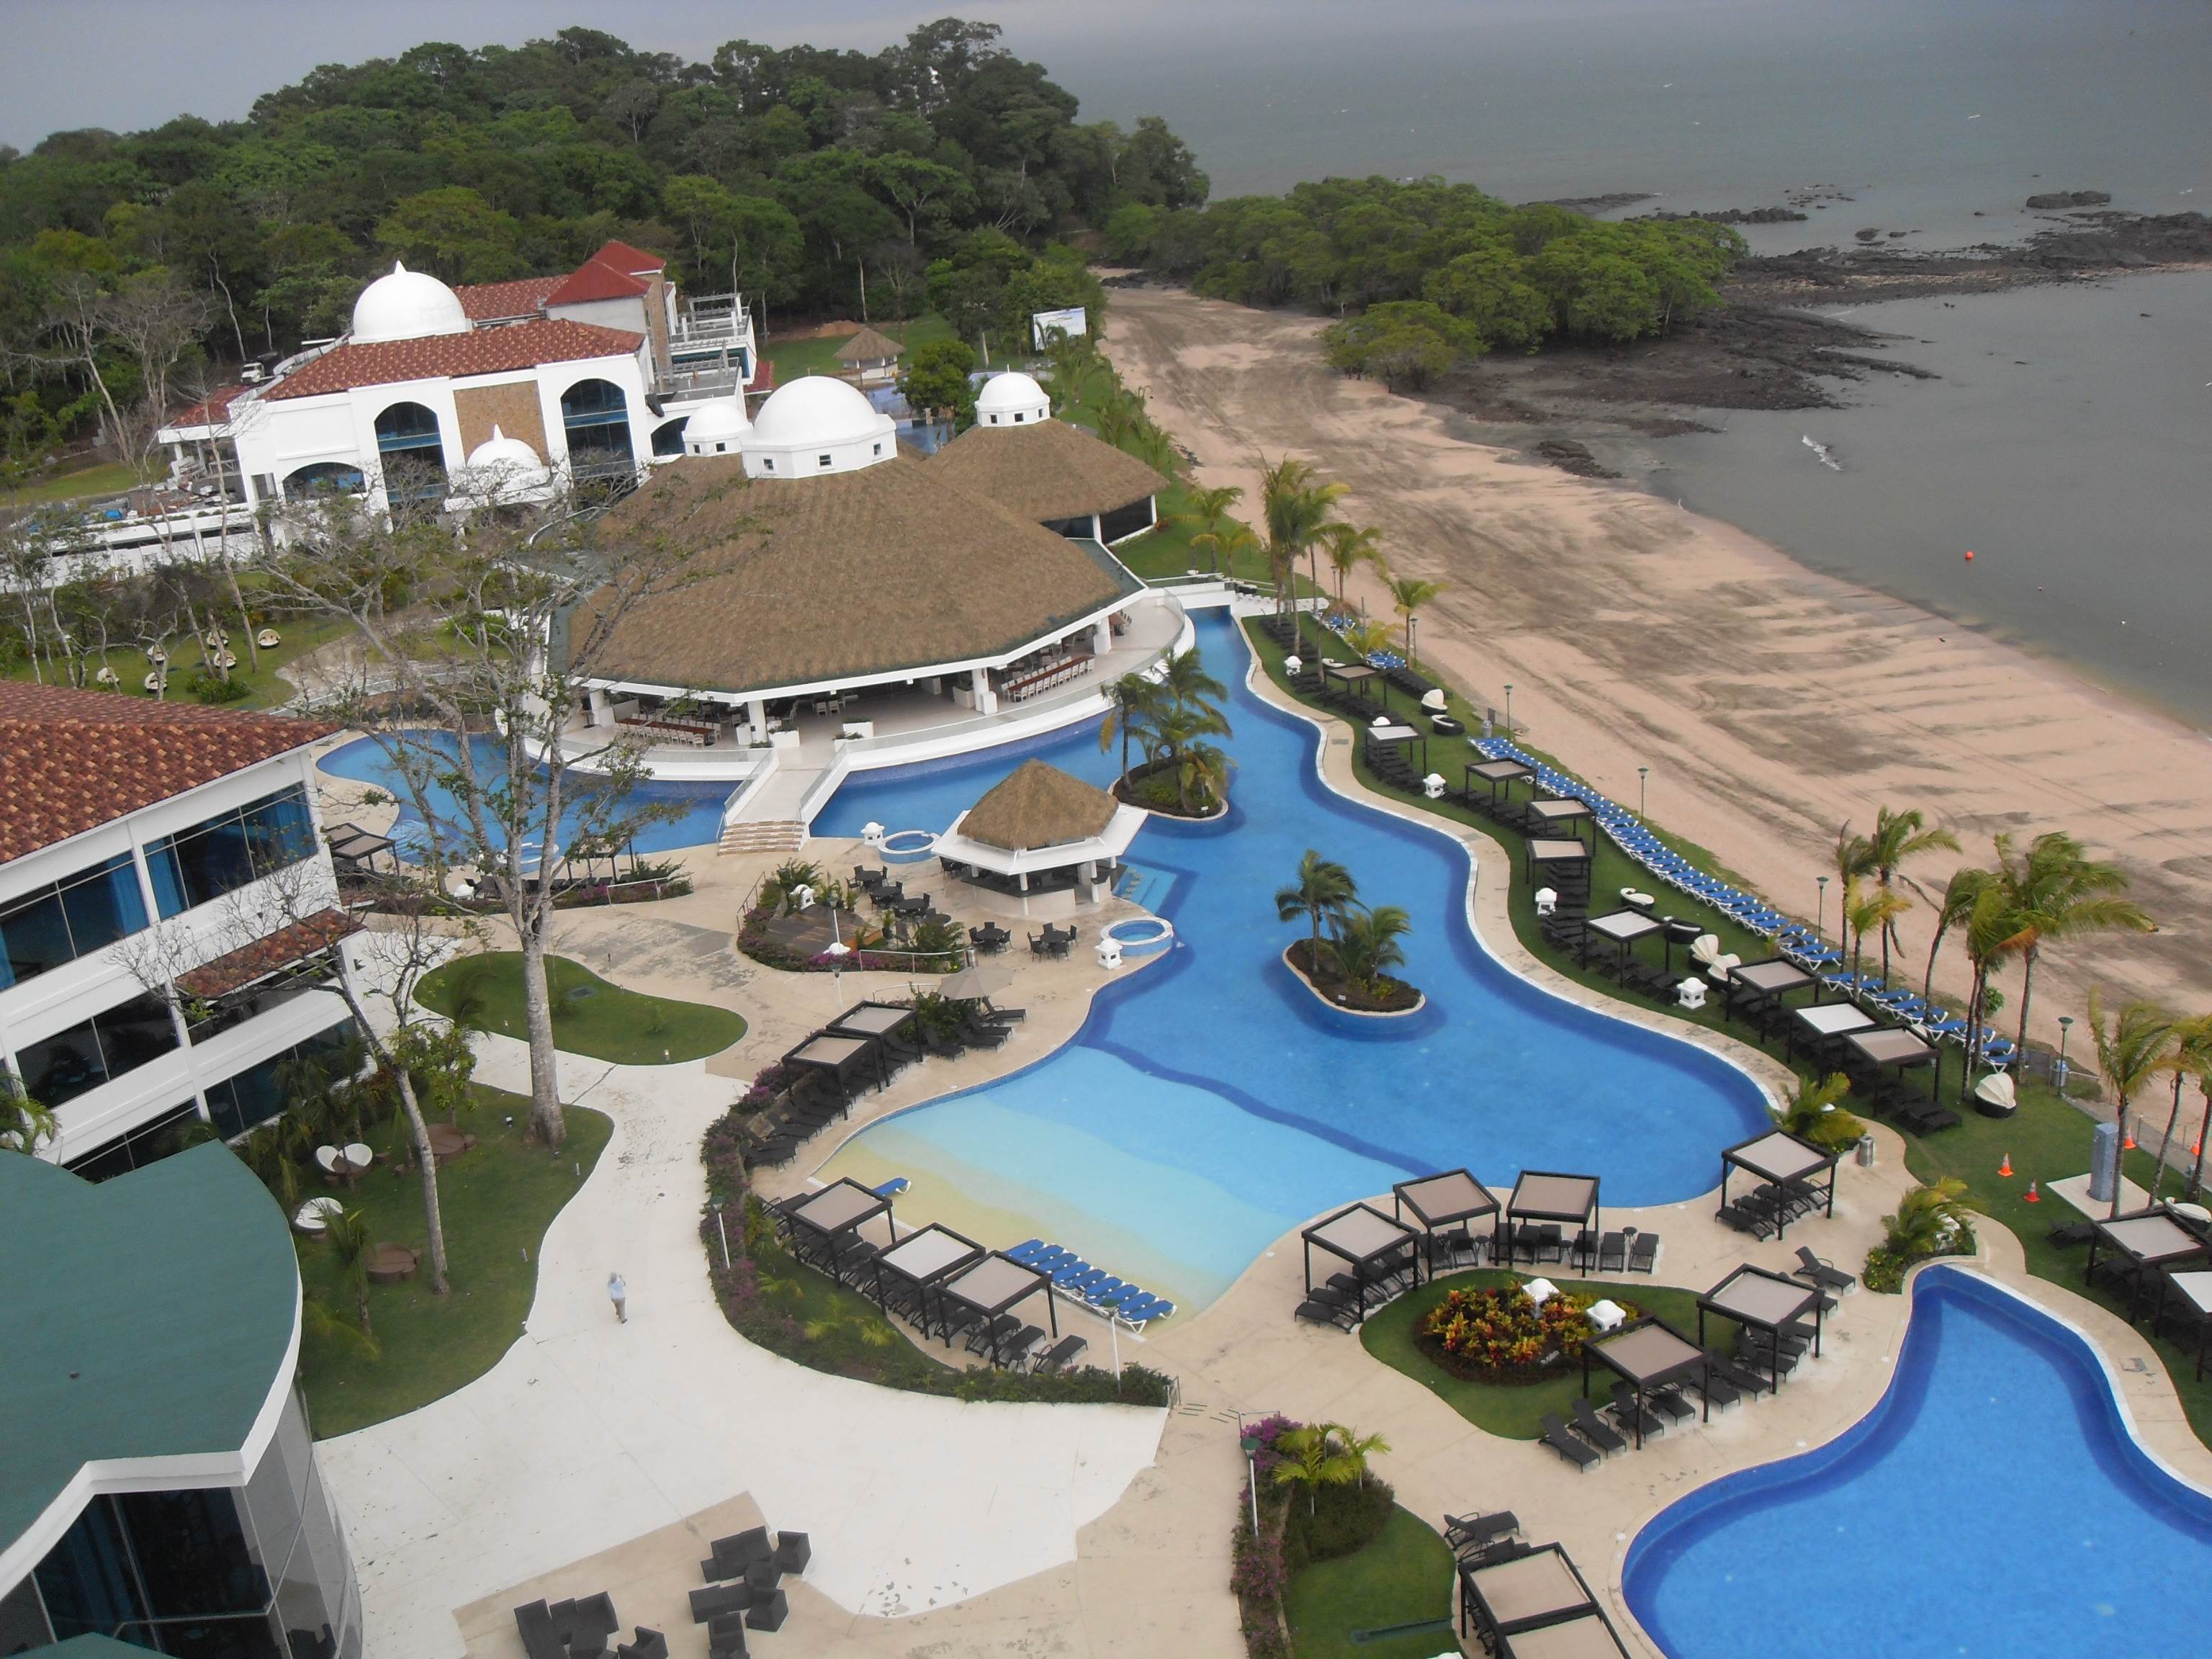 From the balcony of the Westin Playa Bonita Hotel in Veracruz, Panama